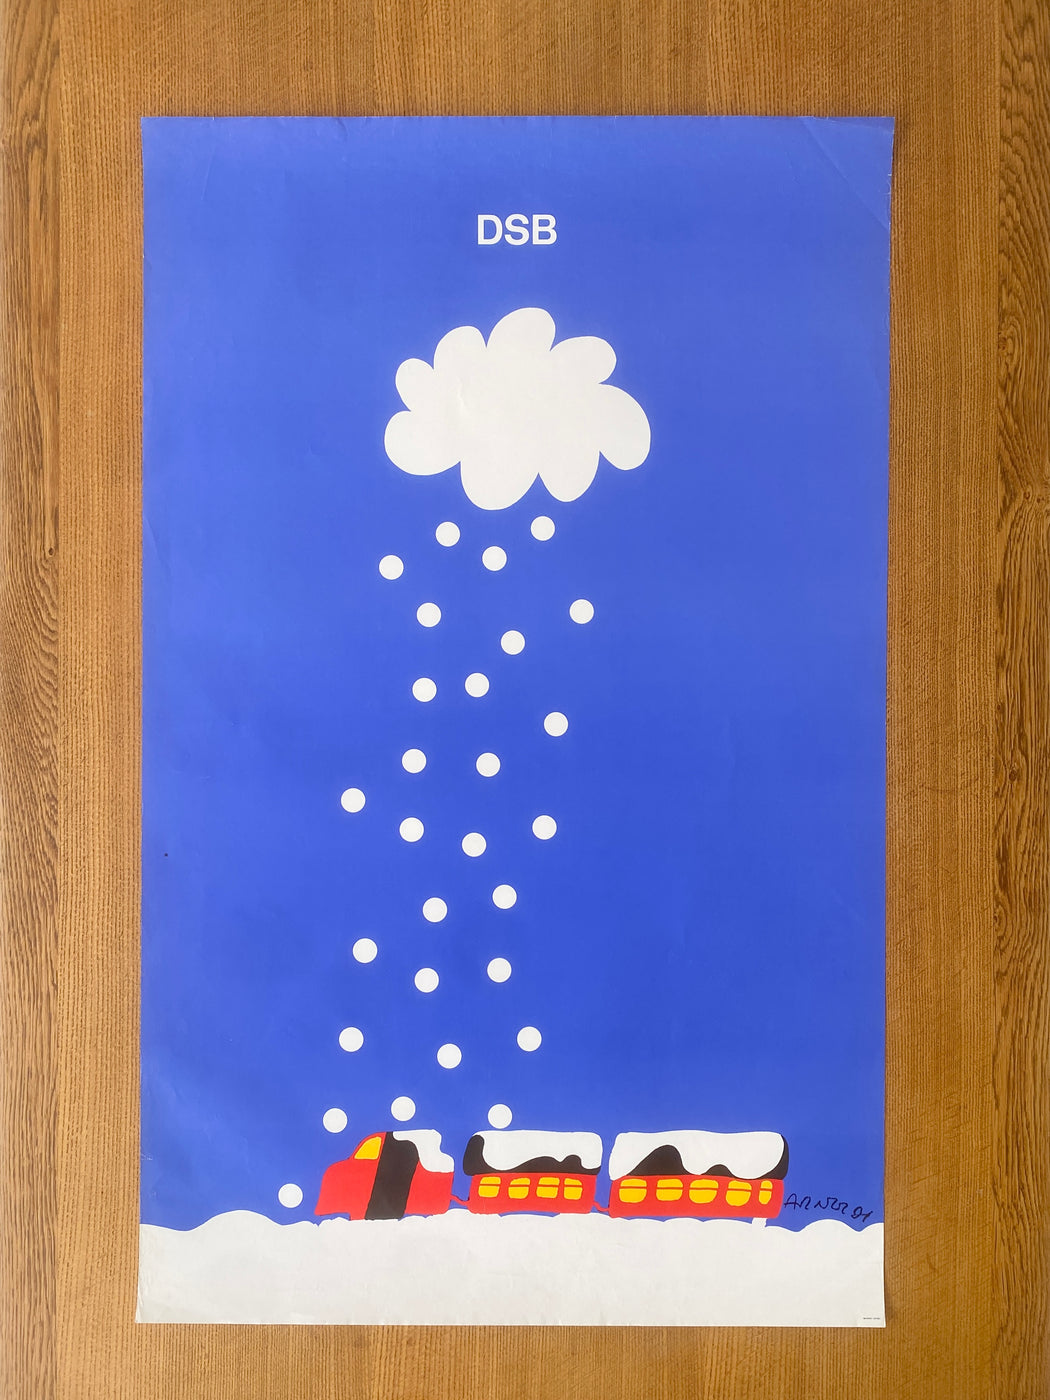 Per Arnoldi 1975 DSB 'Snow' Poster